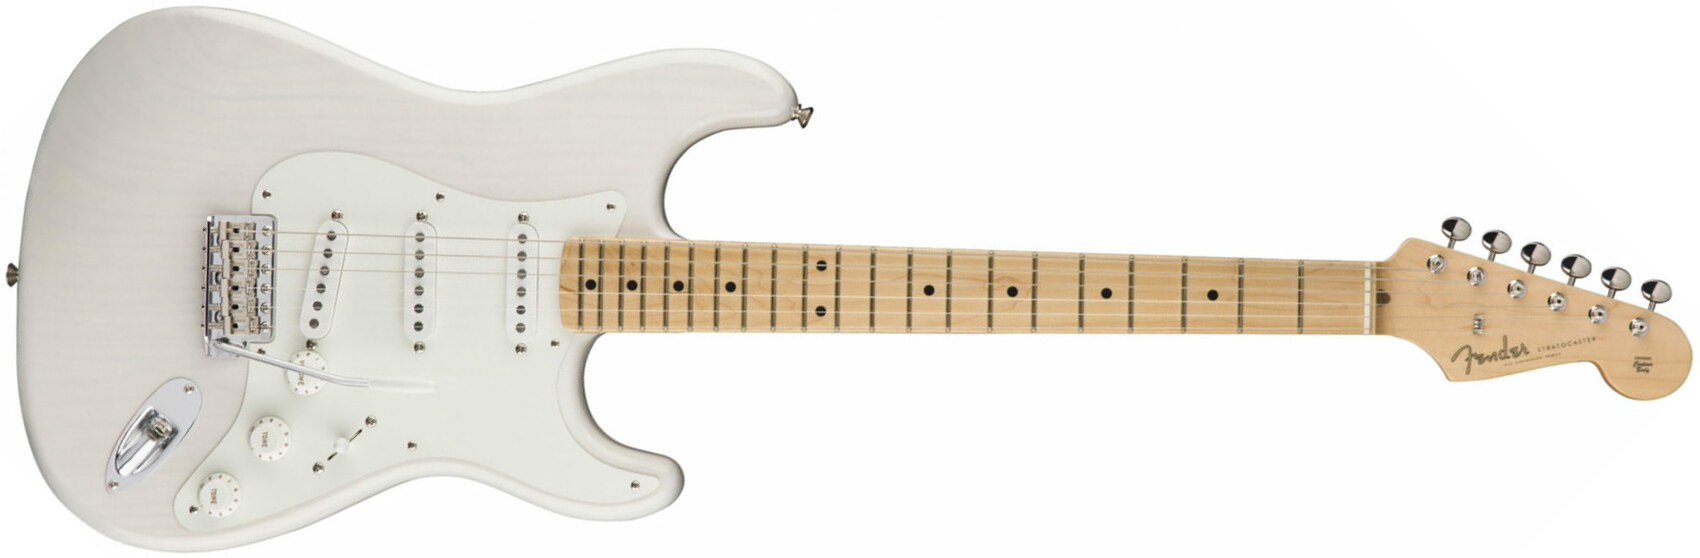 Fender Strat '50s American Original Usa Sss Mn - White Blonde - E-Gitarre in Str-Form - Main picture